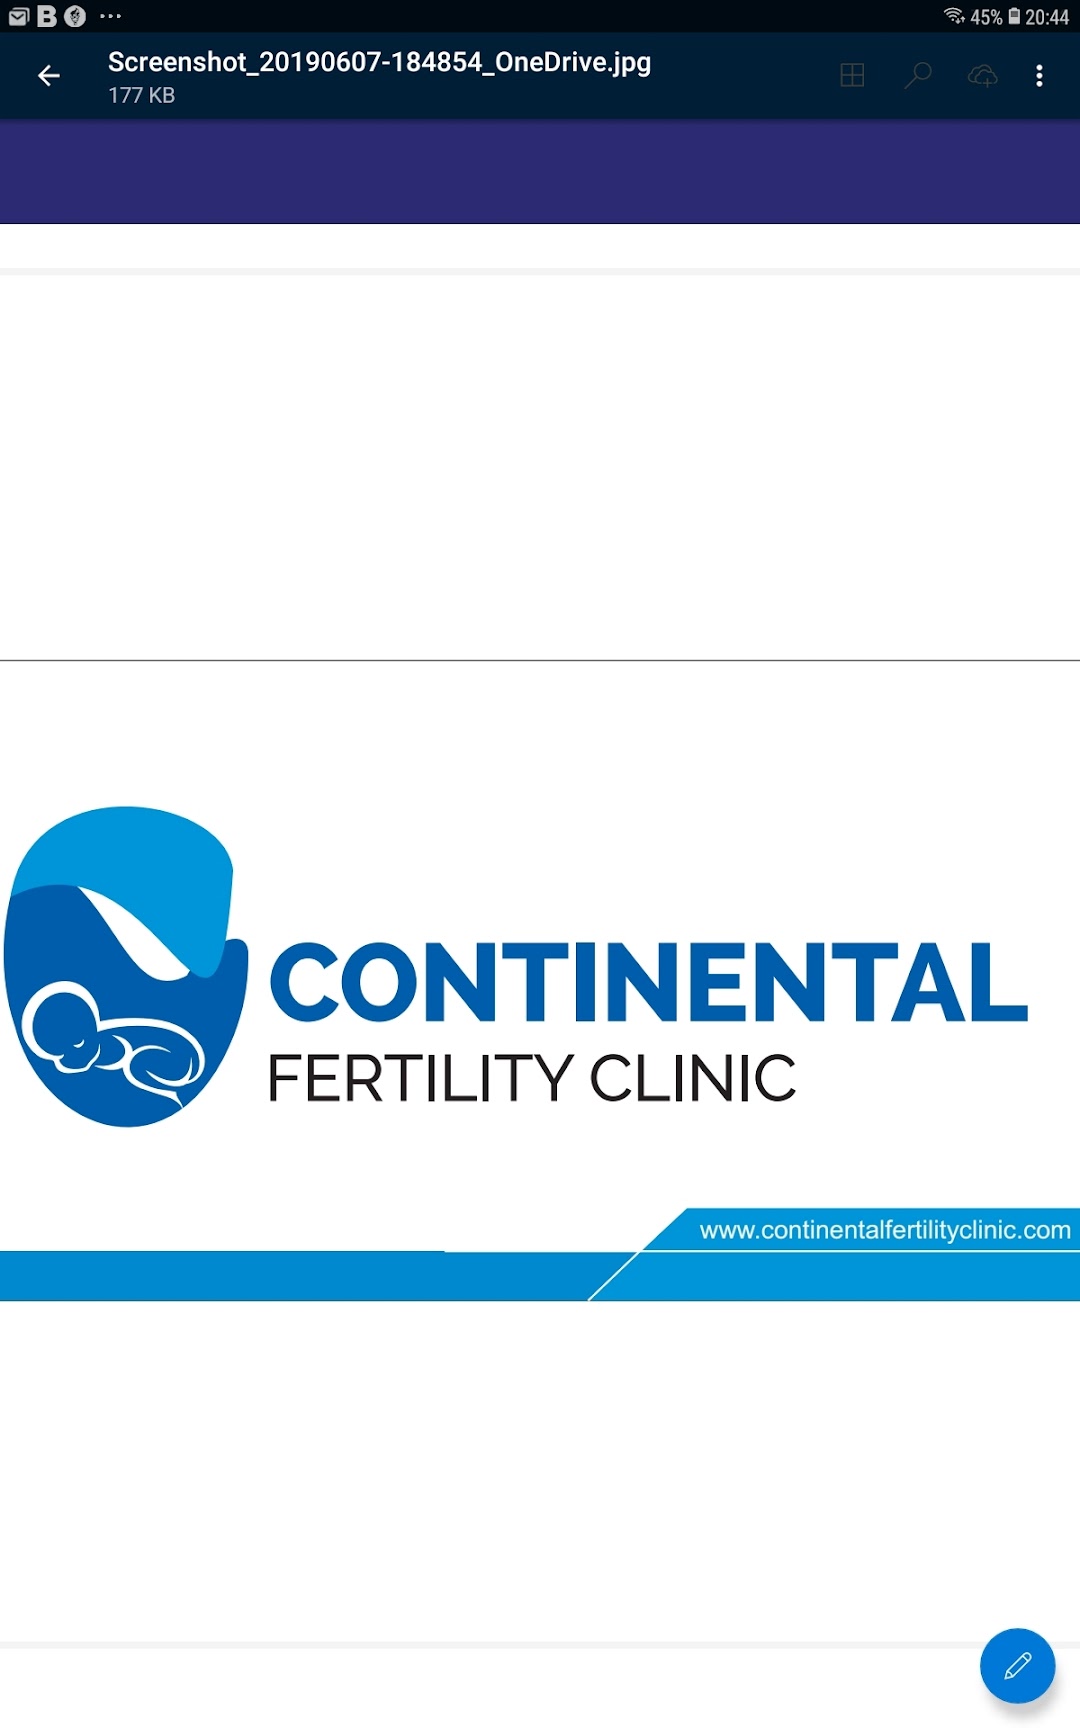 Continental Fertility Clinic